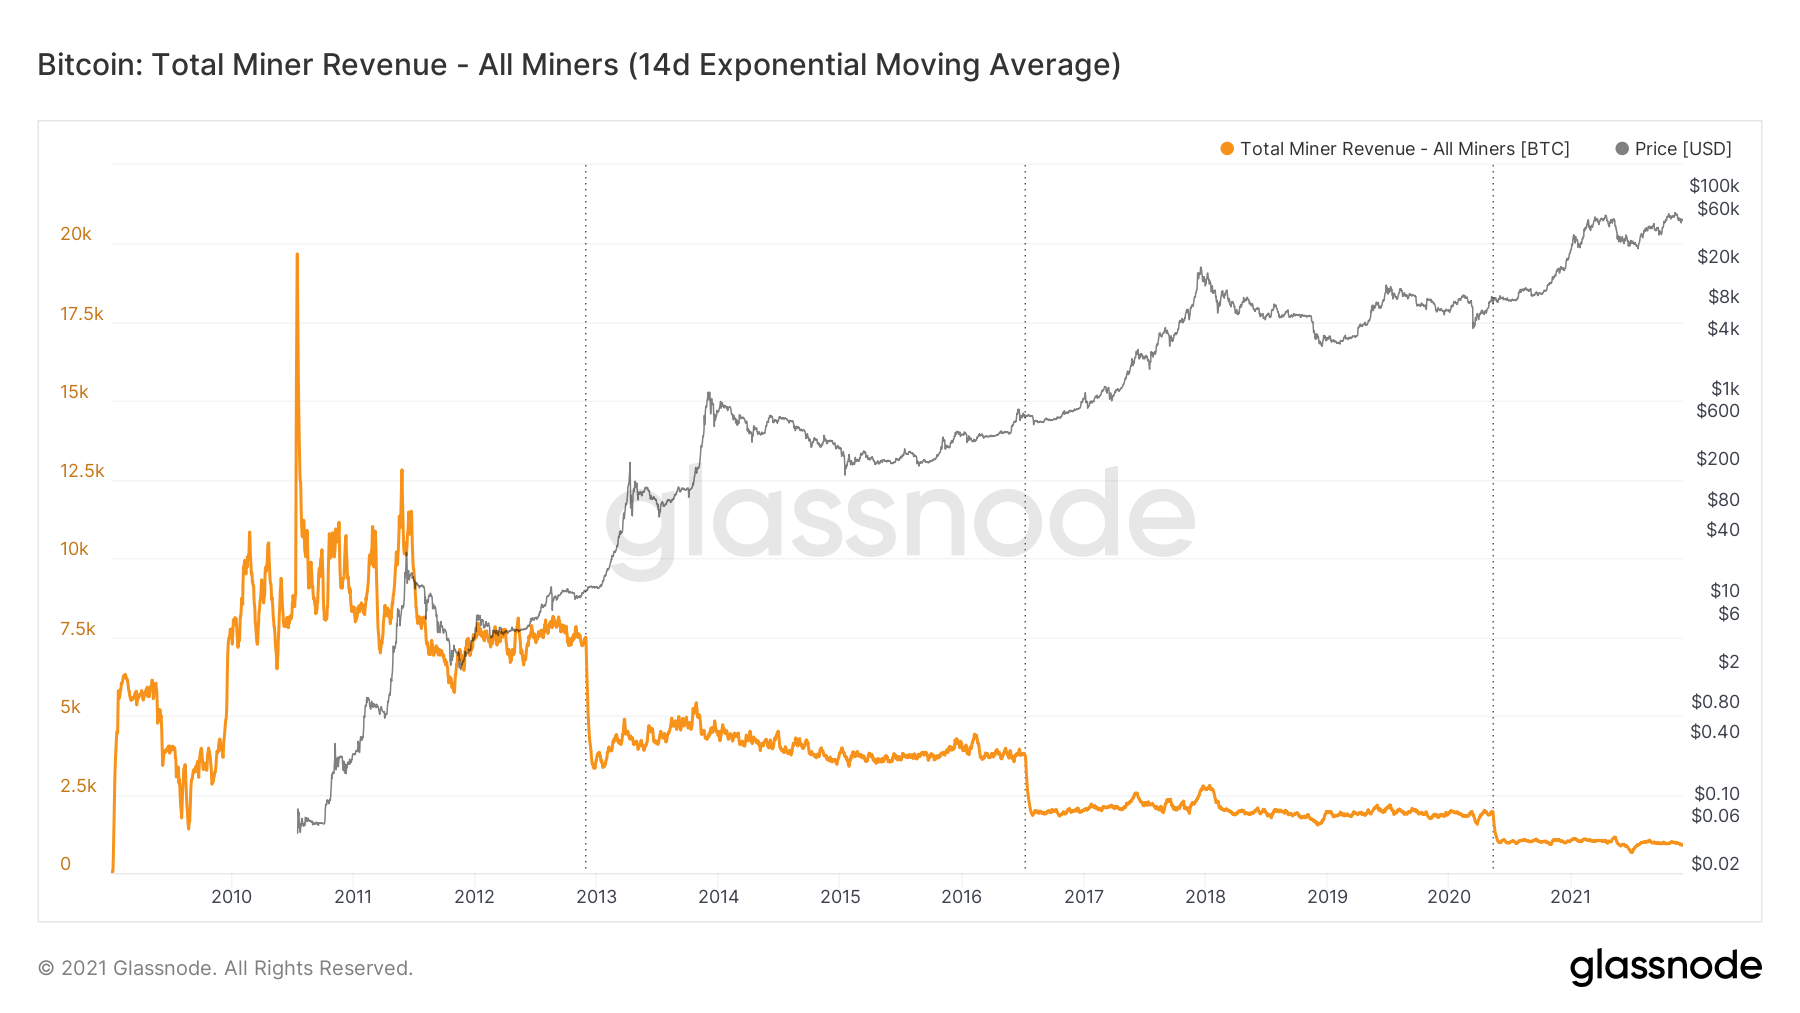 Long-term miner revenue